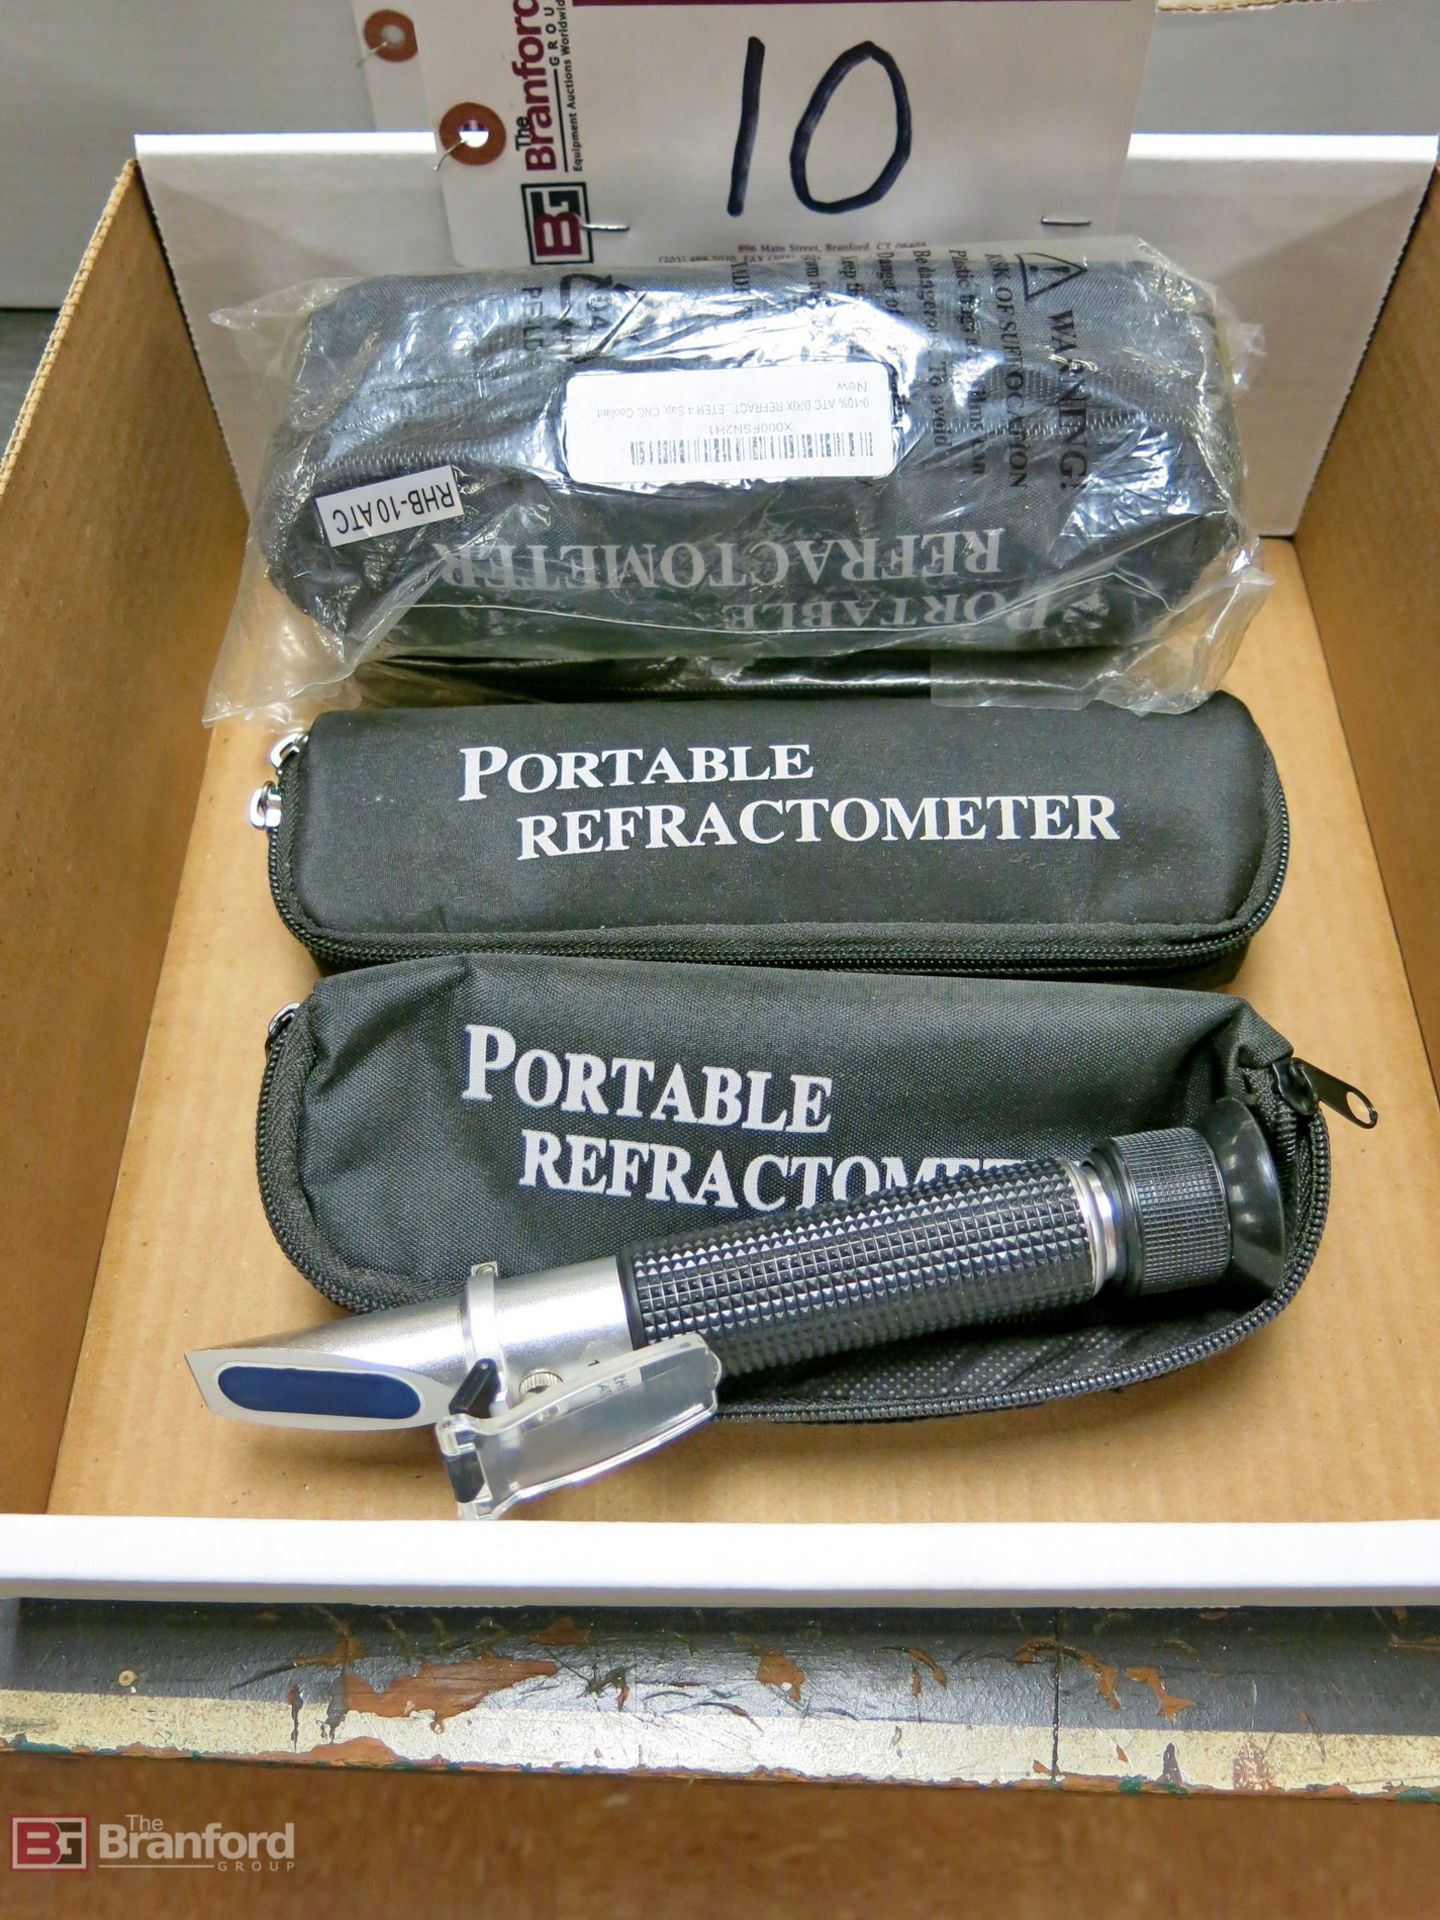 (4) portable refractometer's